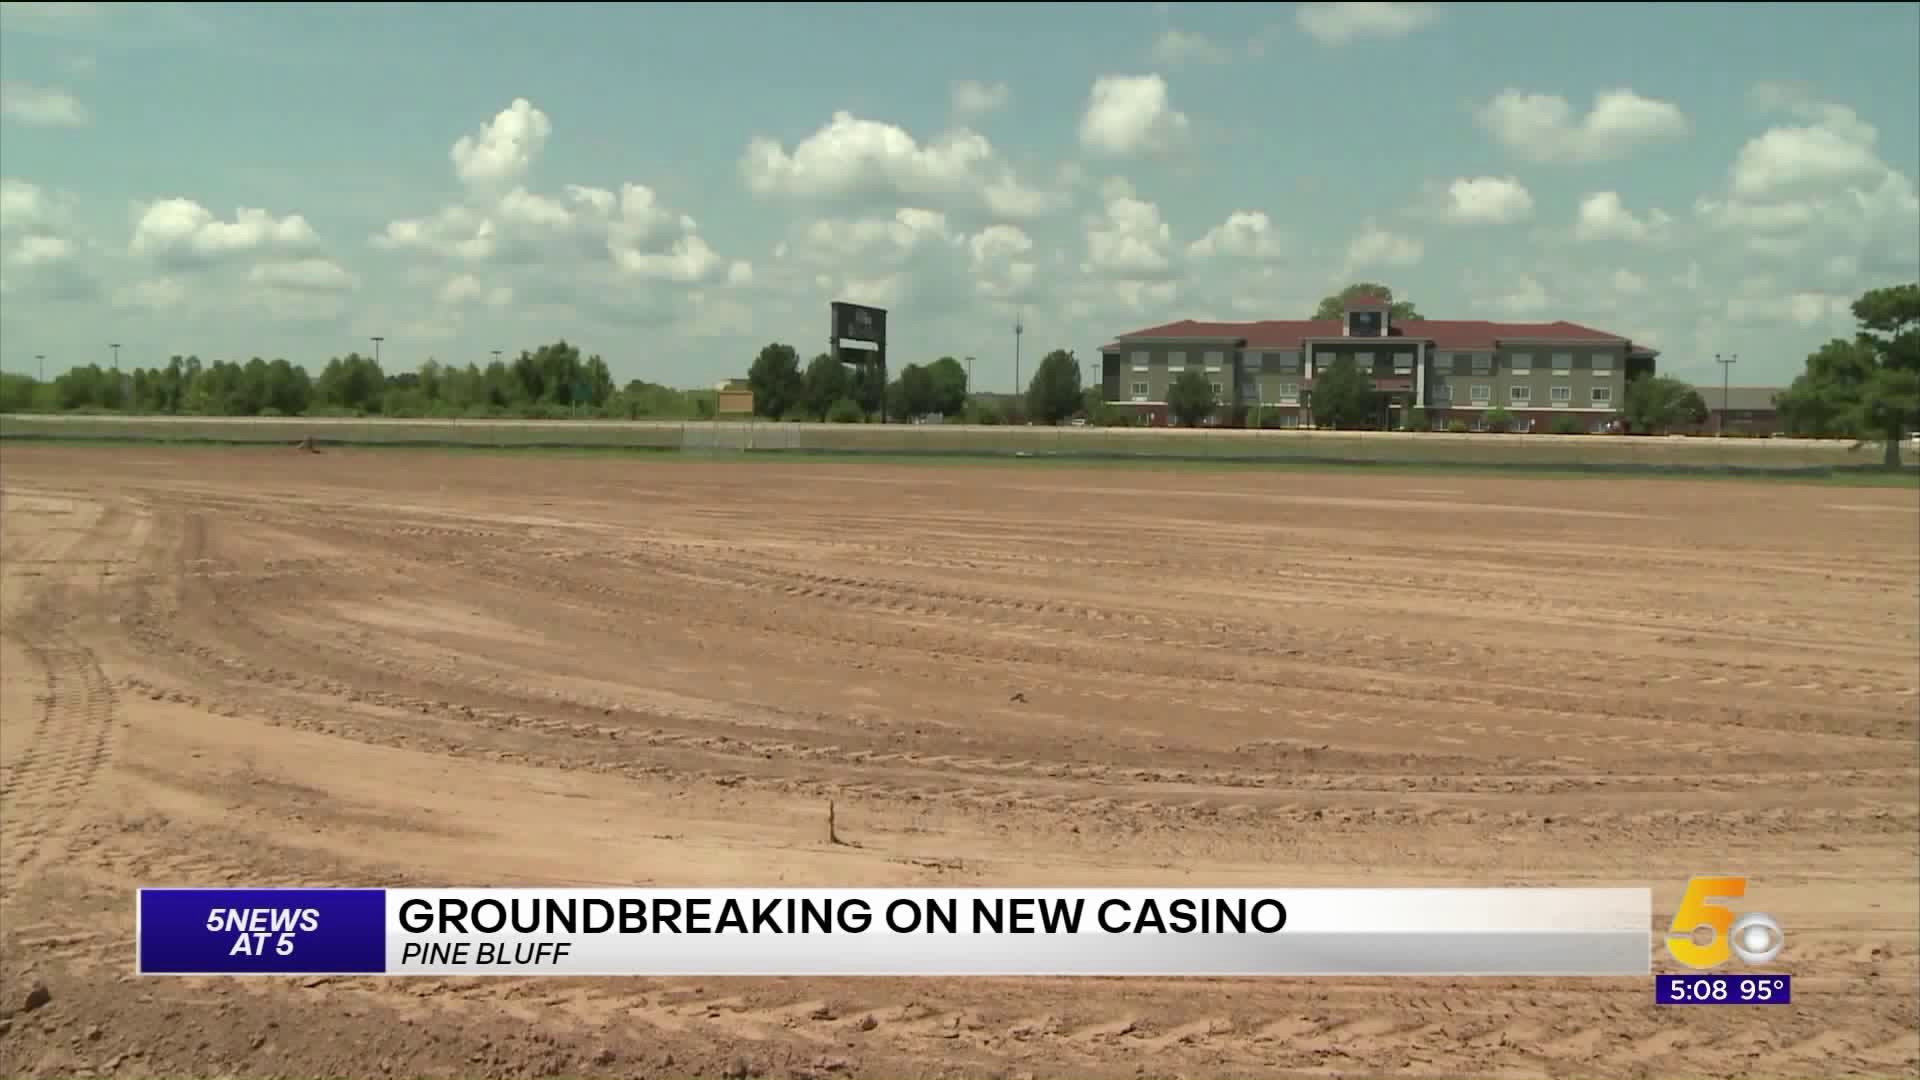 Groundbreaking on New Casino in Pine Bluff